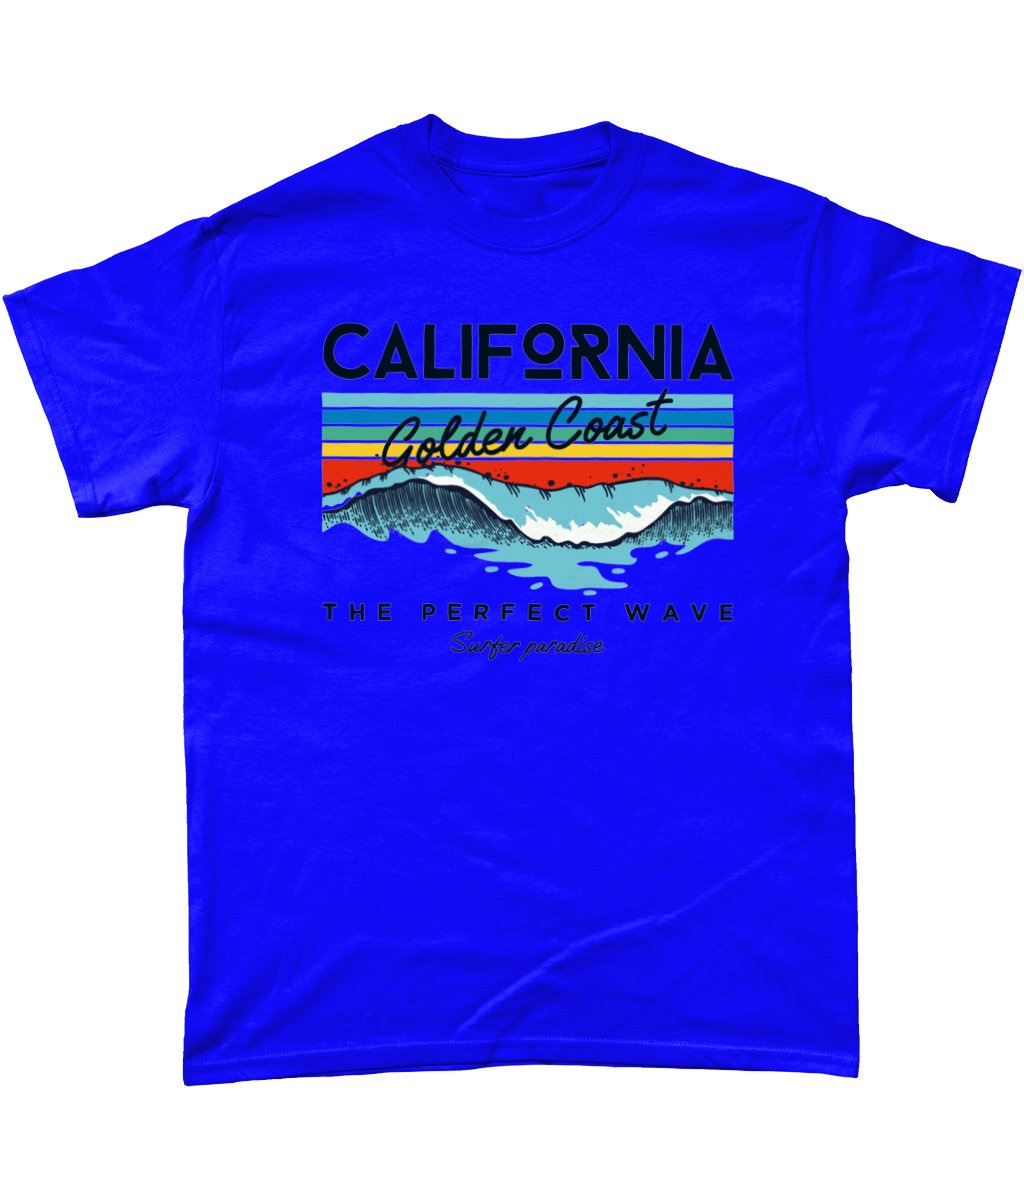 Surfing T-shirt California Golden Coast Surfing Cool Retro | Etsy